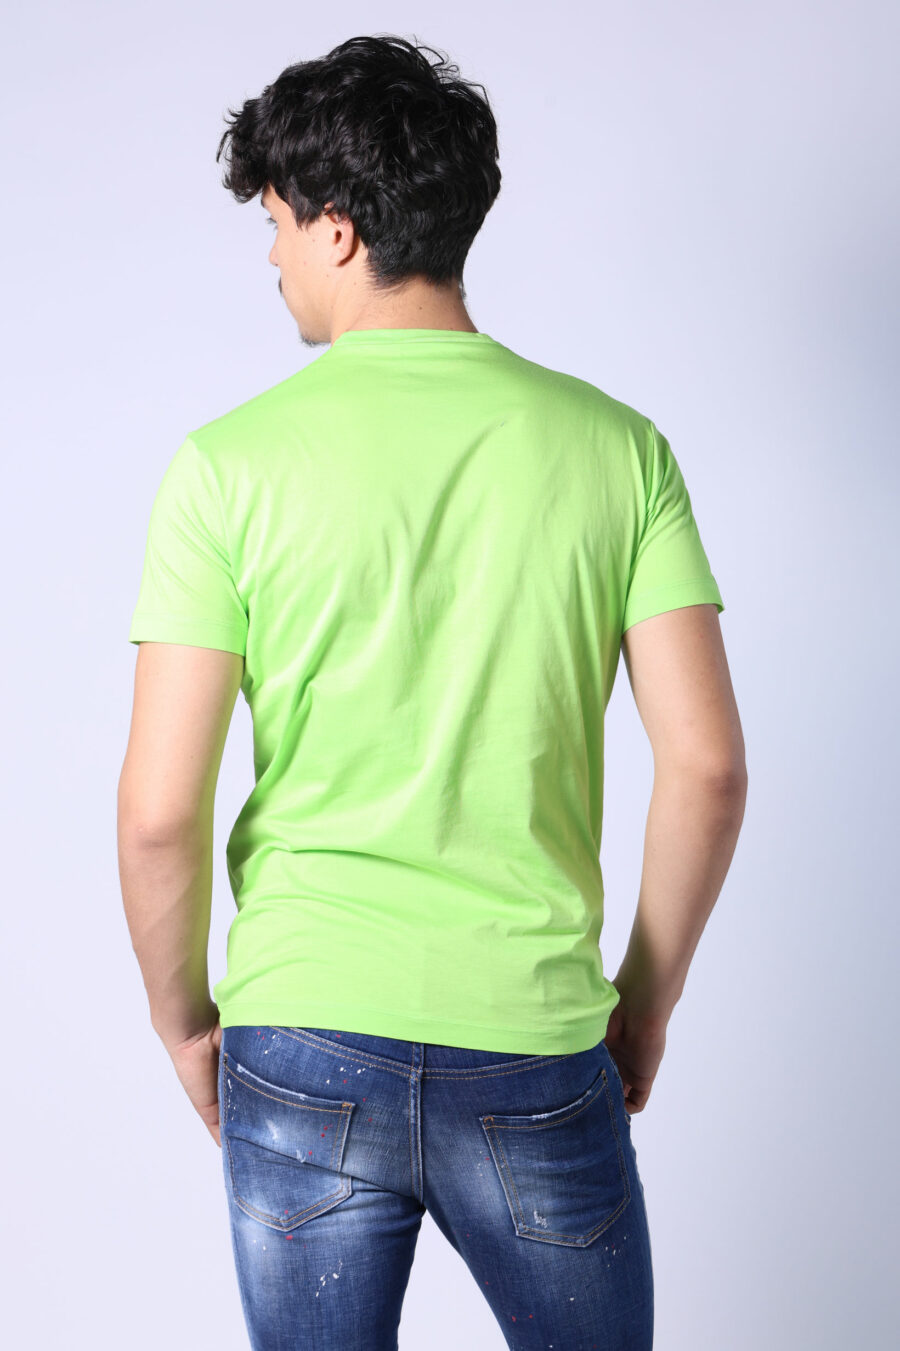 T-shirt verde lima com maxilogo "icon" preto - Untitled Catalog 05397